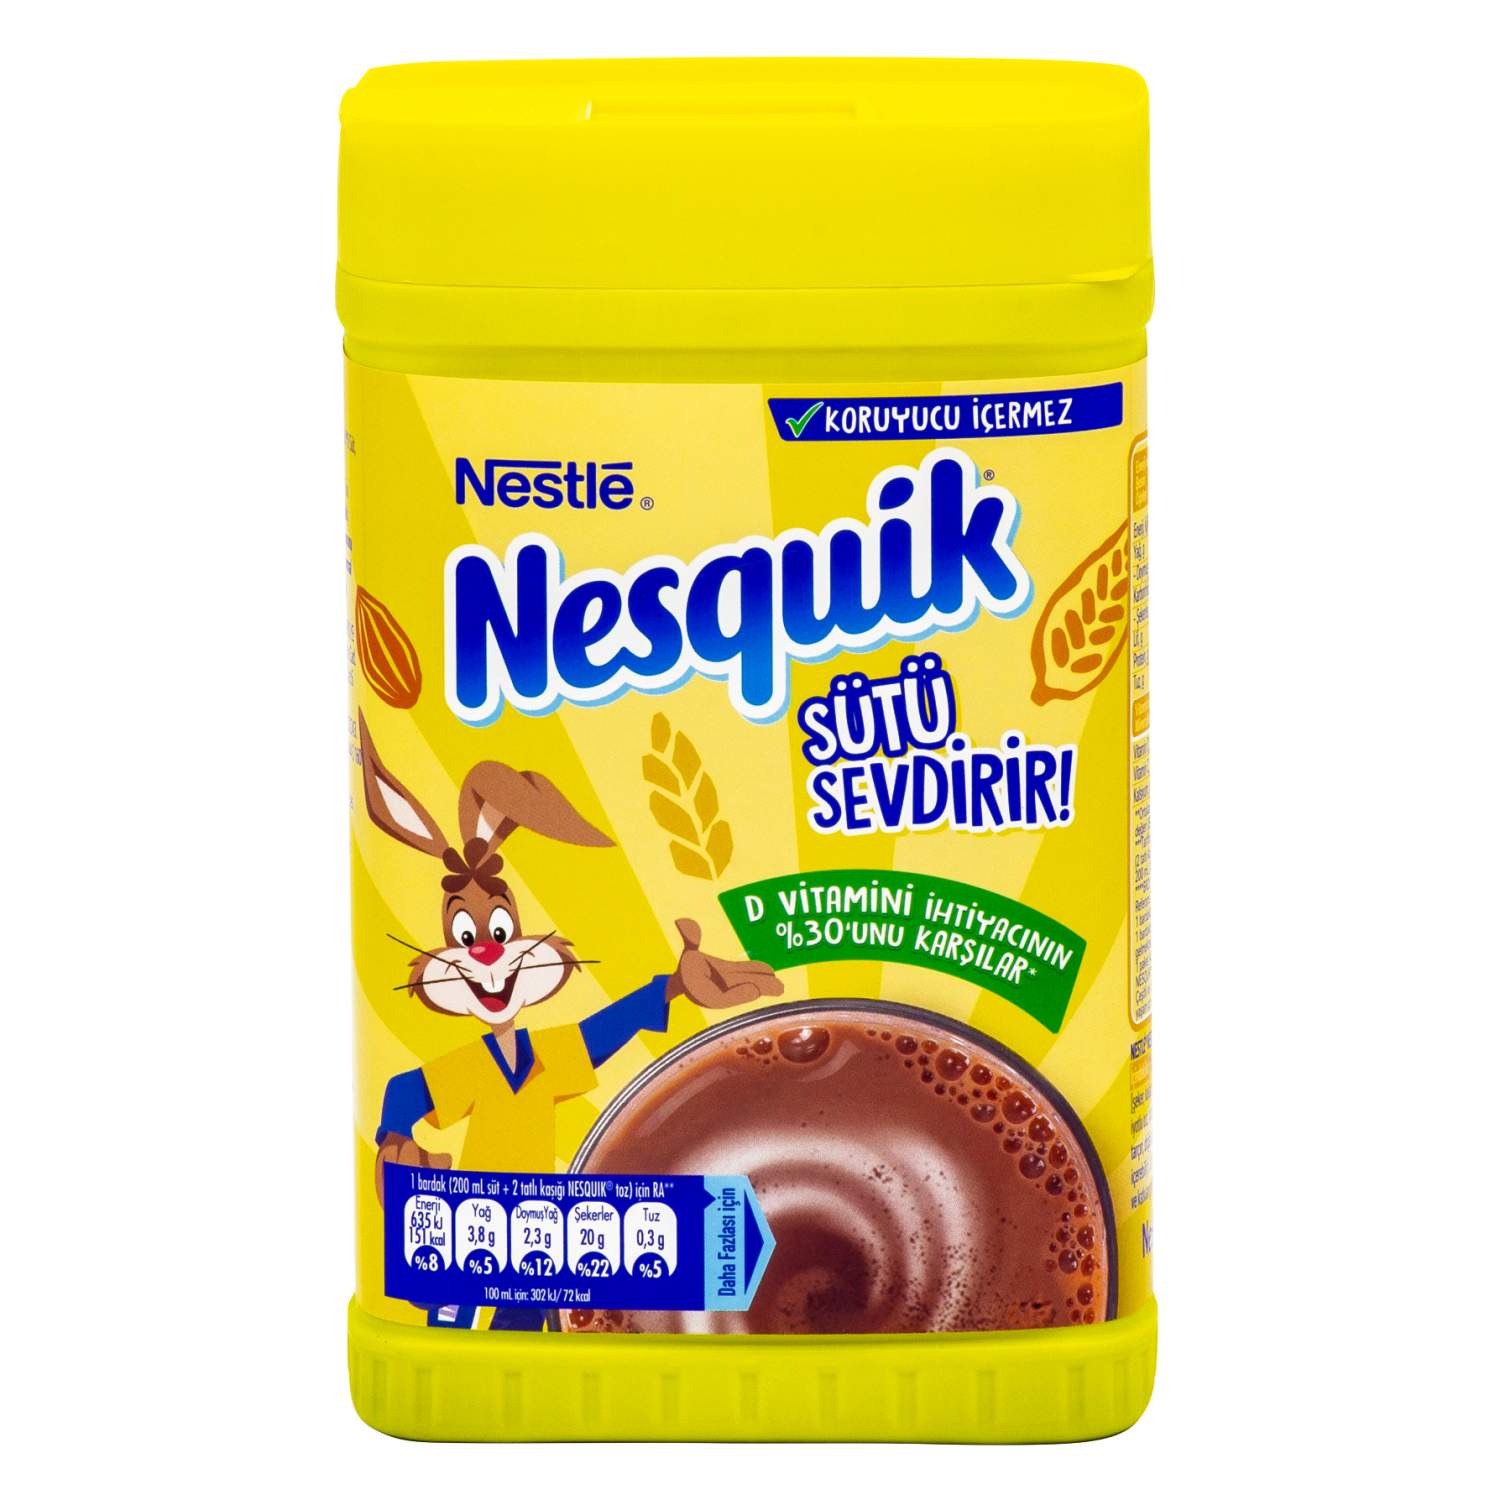 Nesquik какао - купить какао Nesquik, цены в Москве на Мегамаркет.